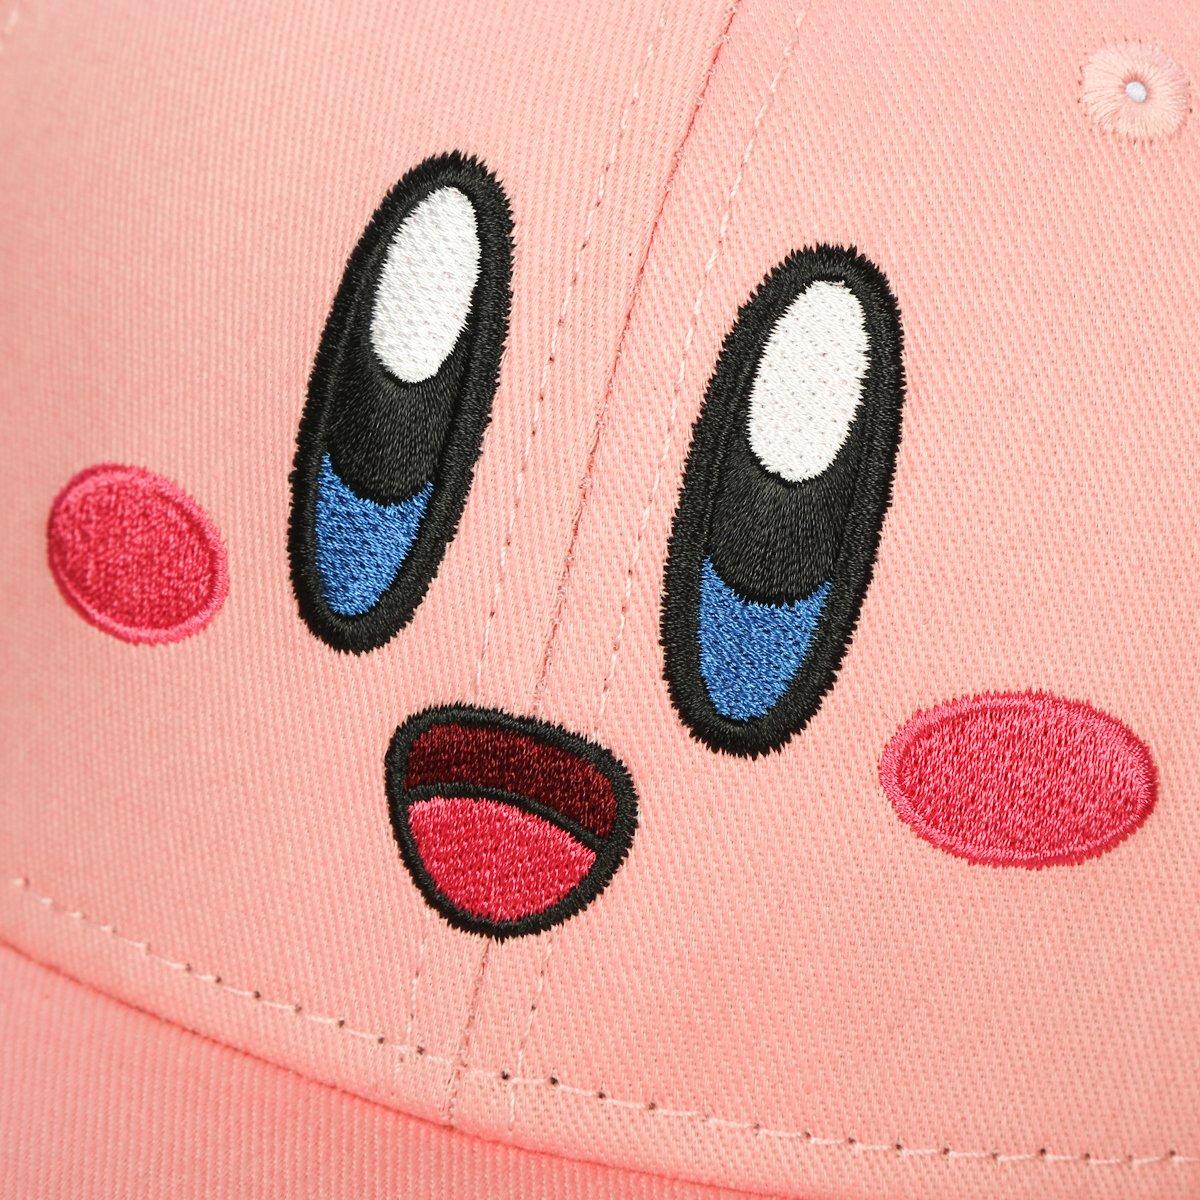 Kirby Big Face Pink Baseball Hat